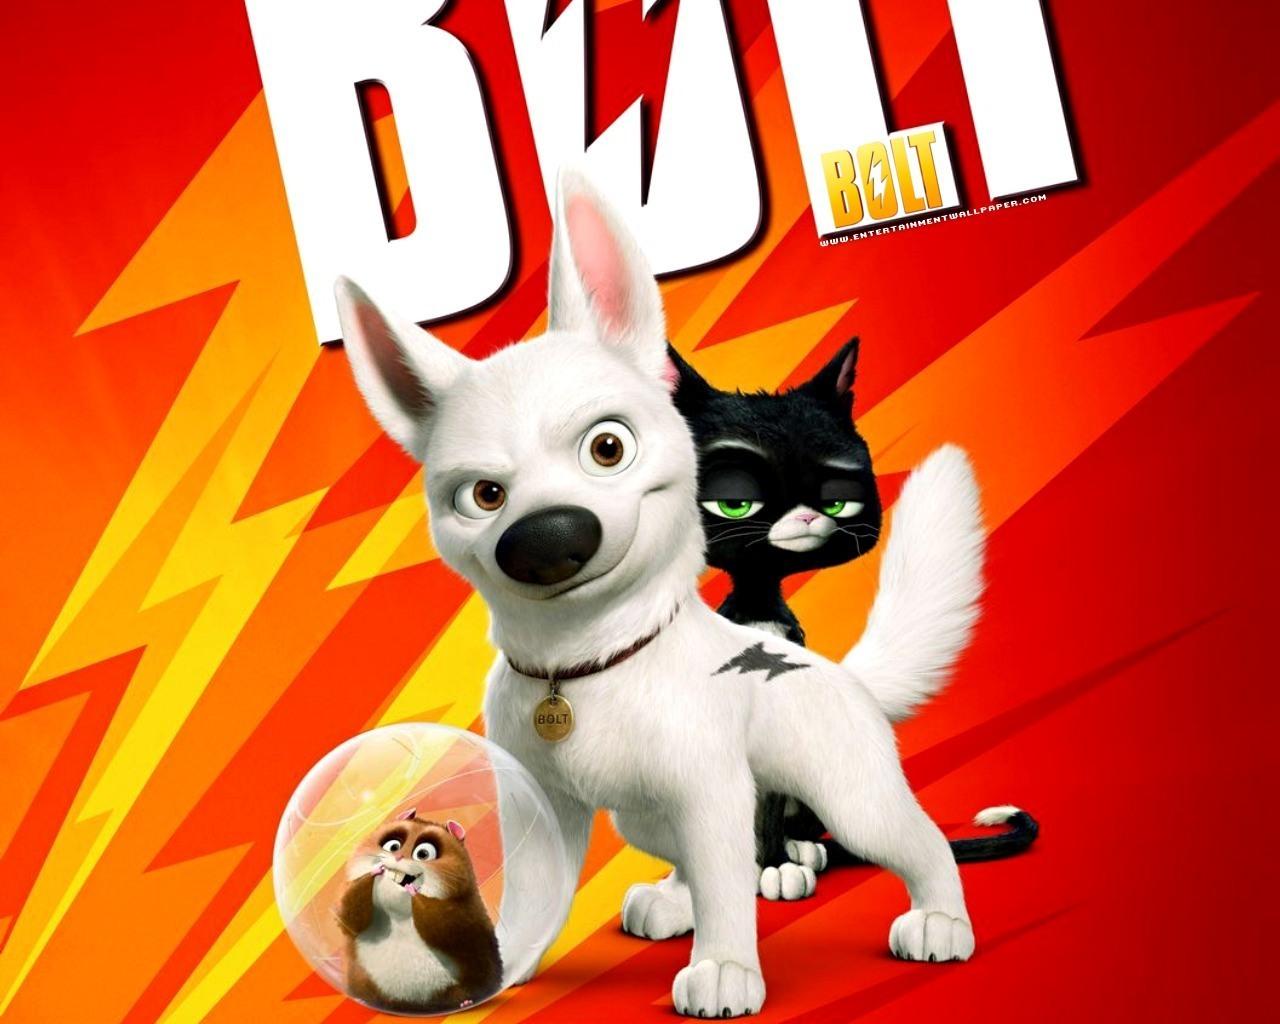 Disney's Bolt image Bolt Wallpaper HD wallpaper and background